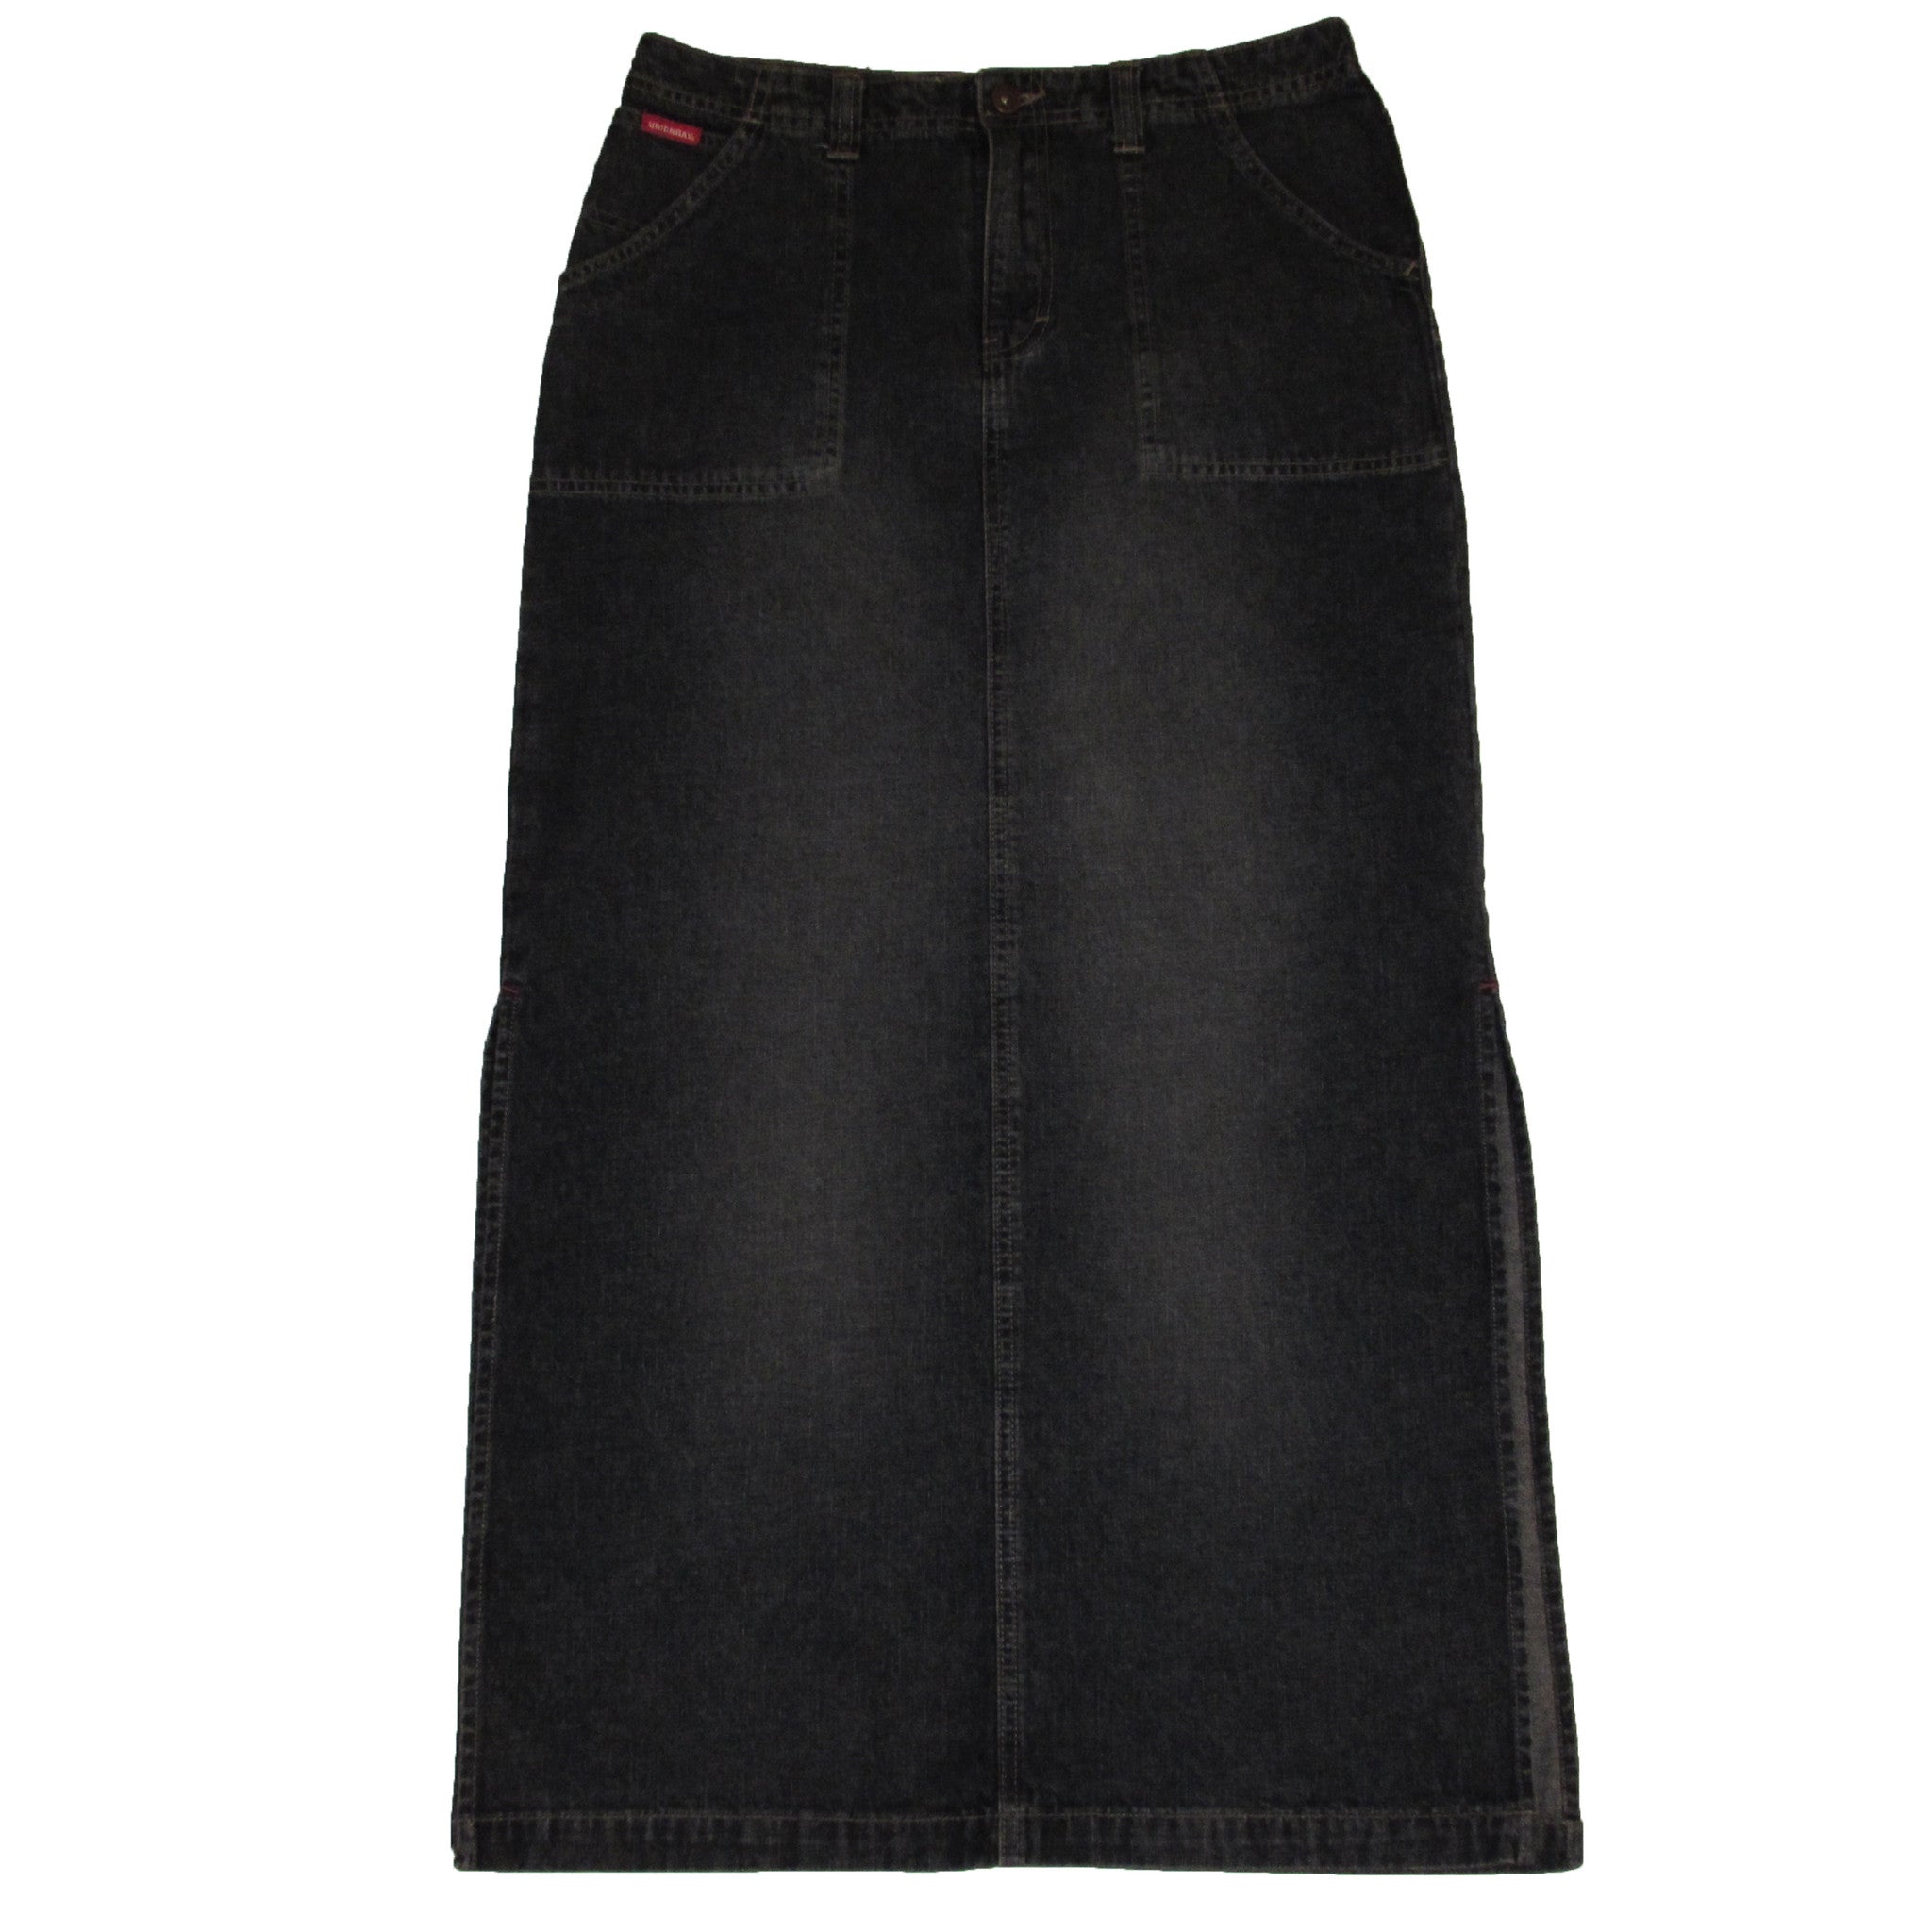 Unionbay Denim Skirt Front Look